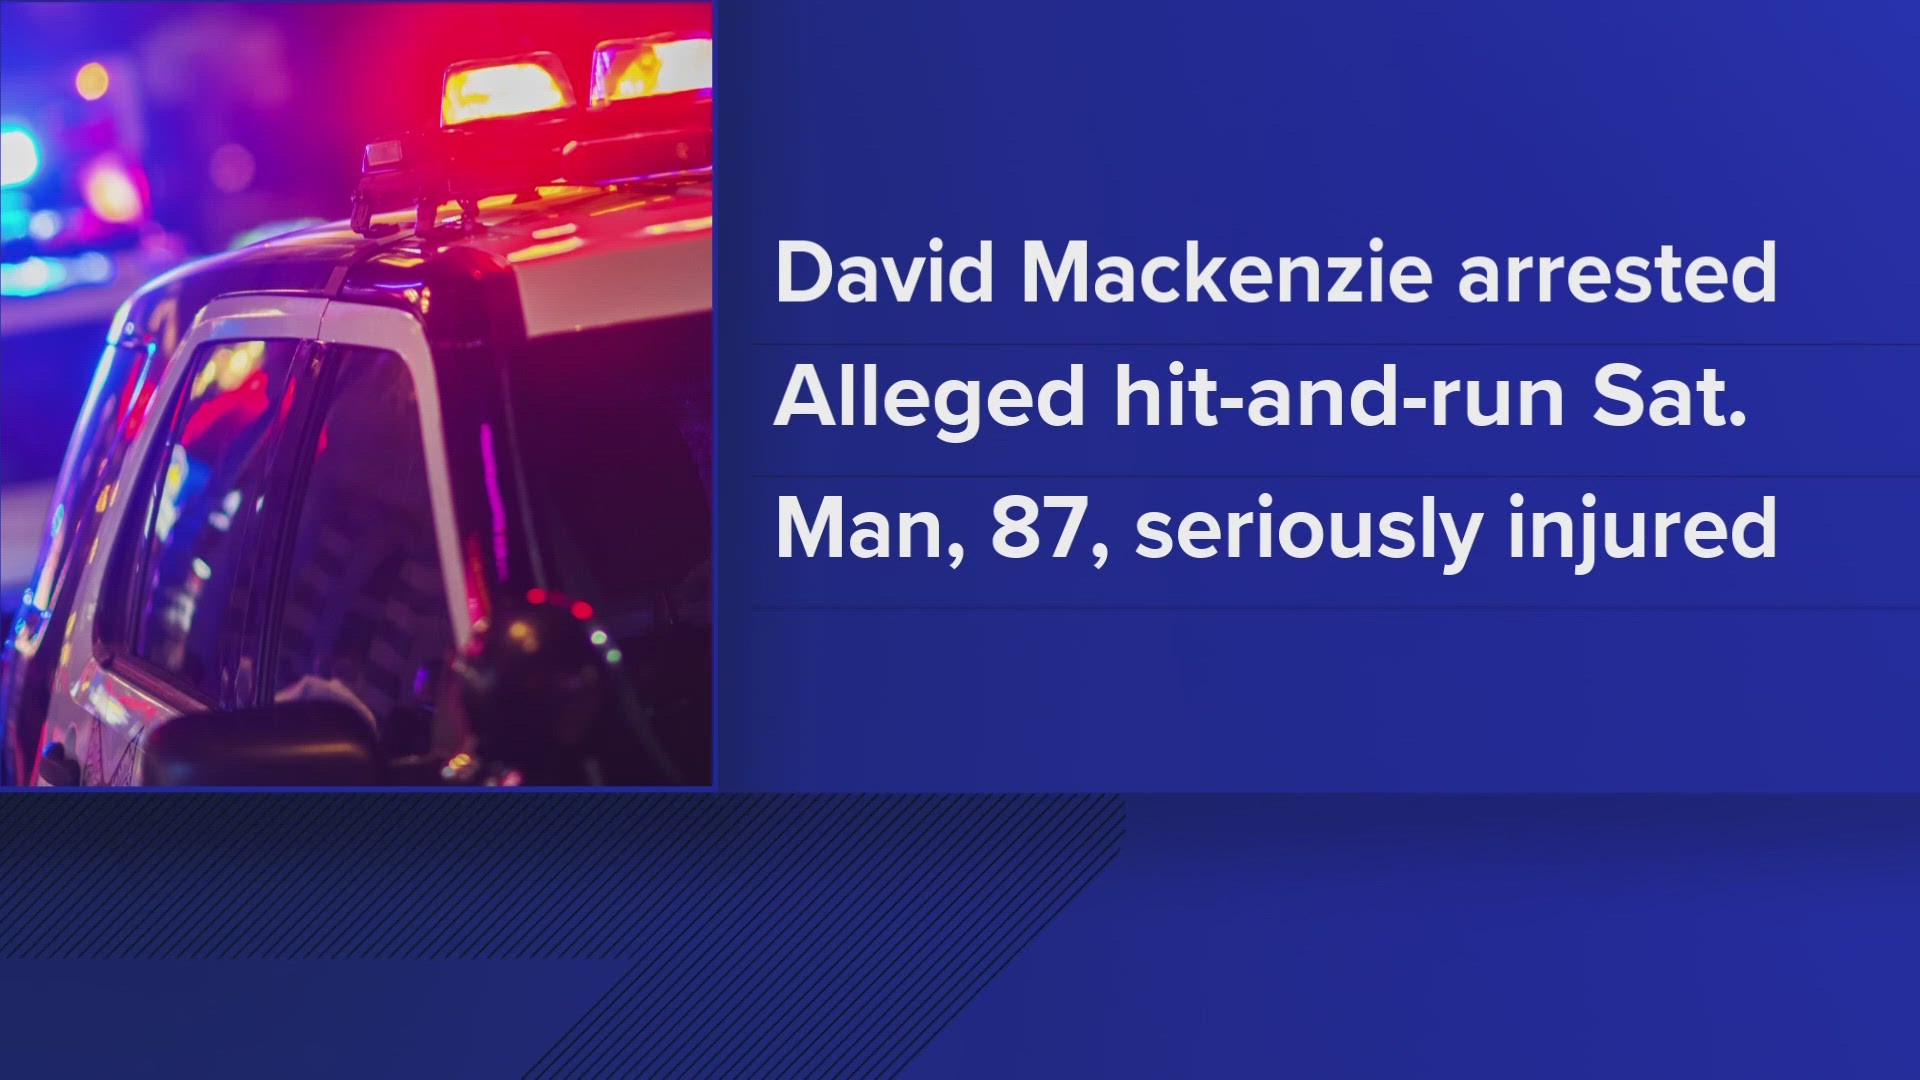 David Mackenzie, 51, reportedly fled the scene towards Holden.